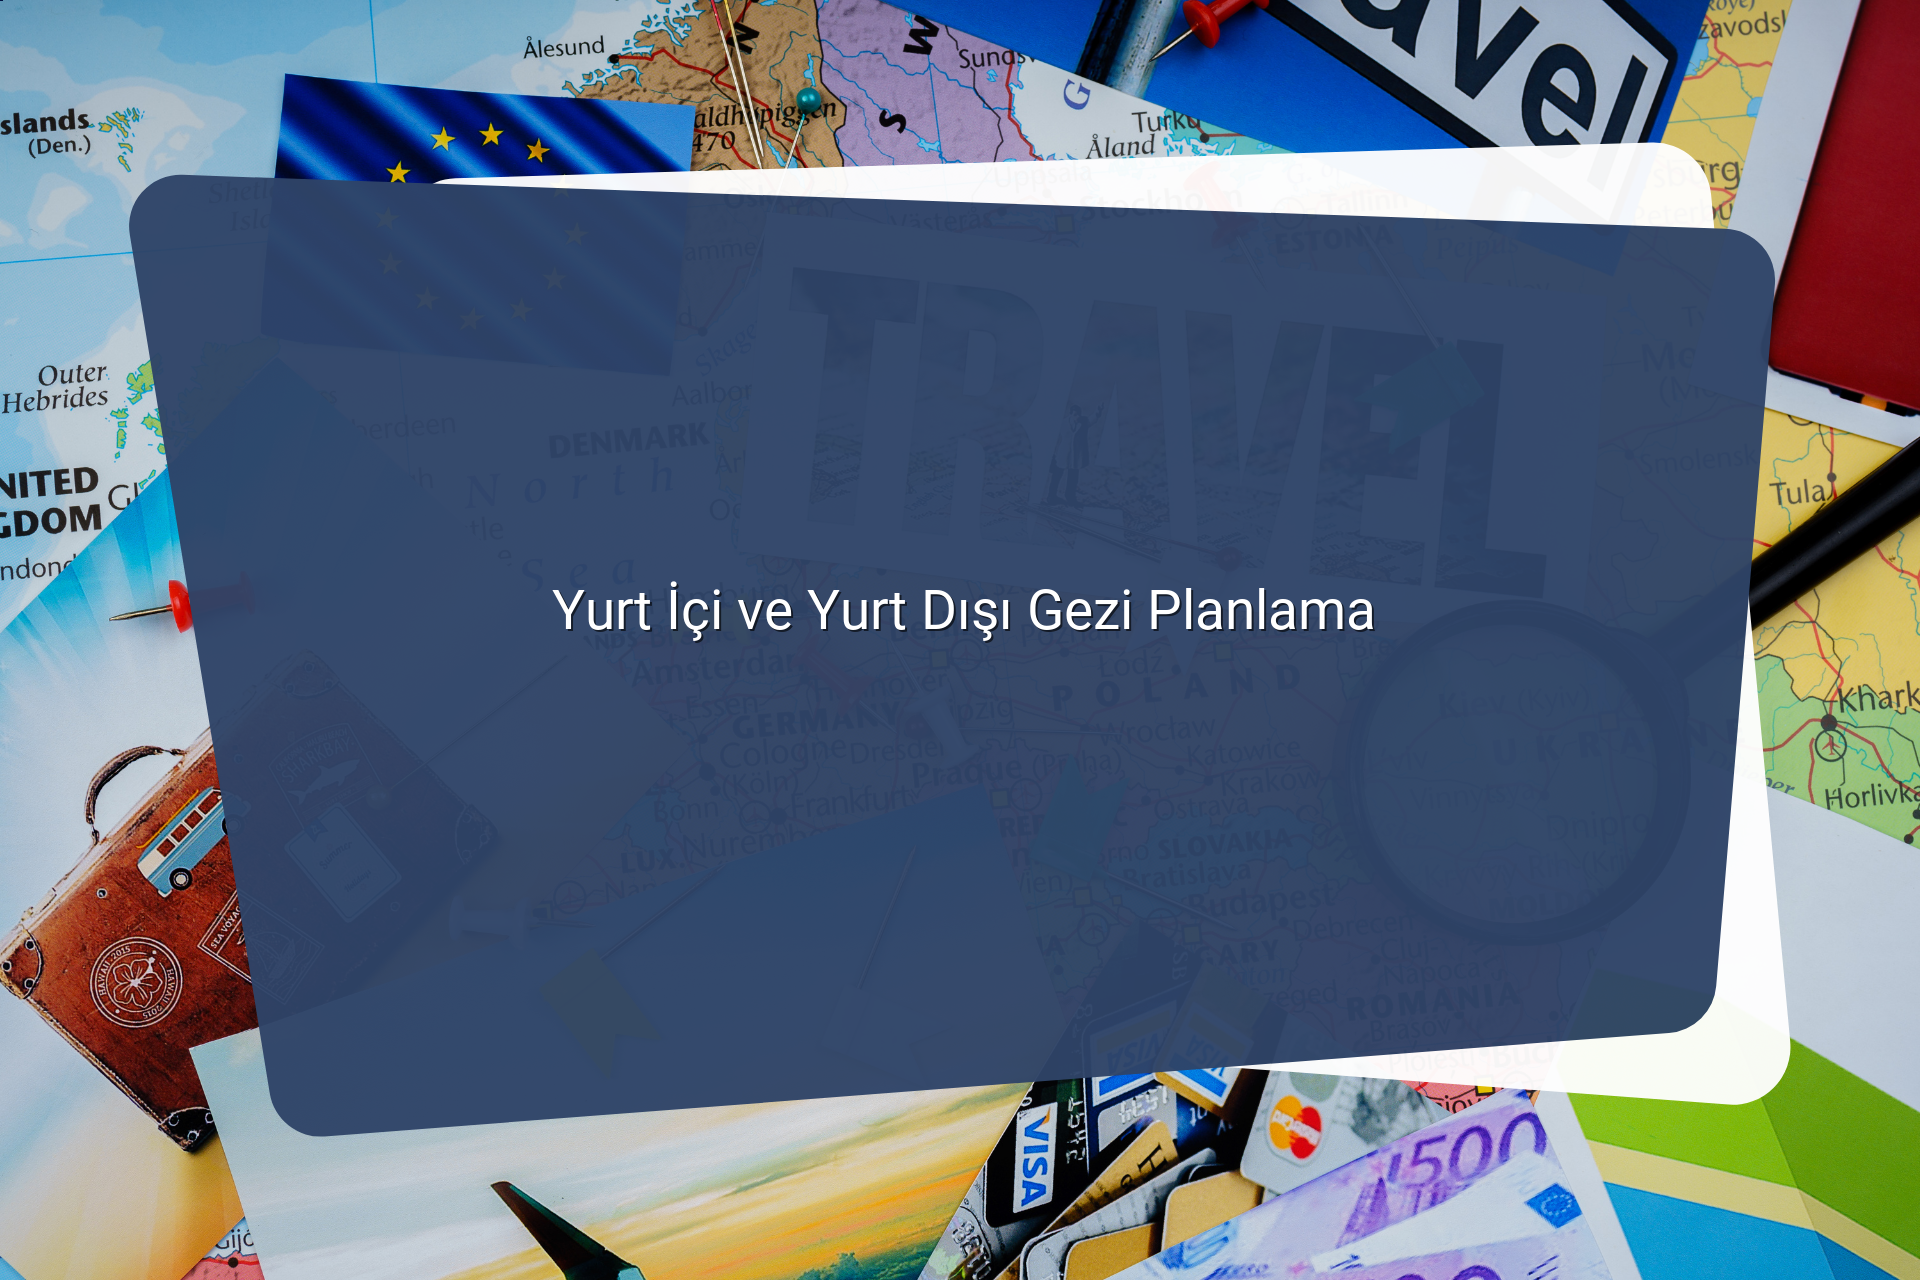 Yurt Ici ve Yurt Disi Gezi Planlama